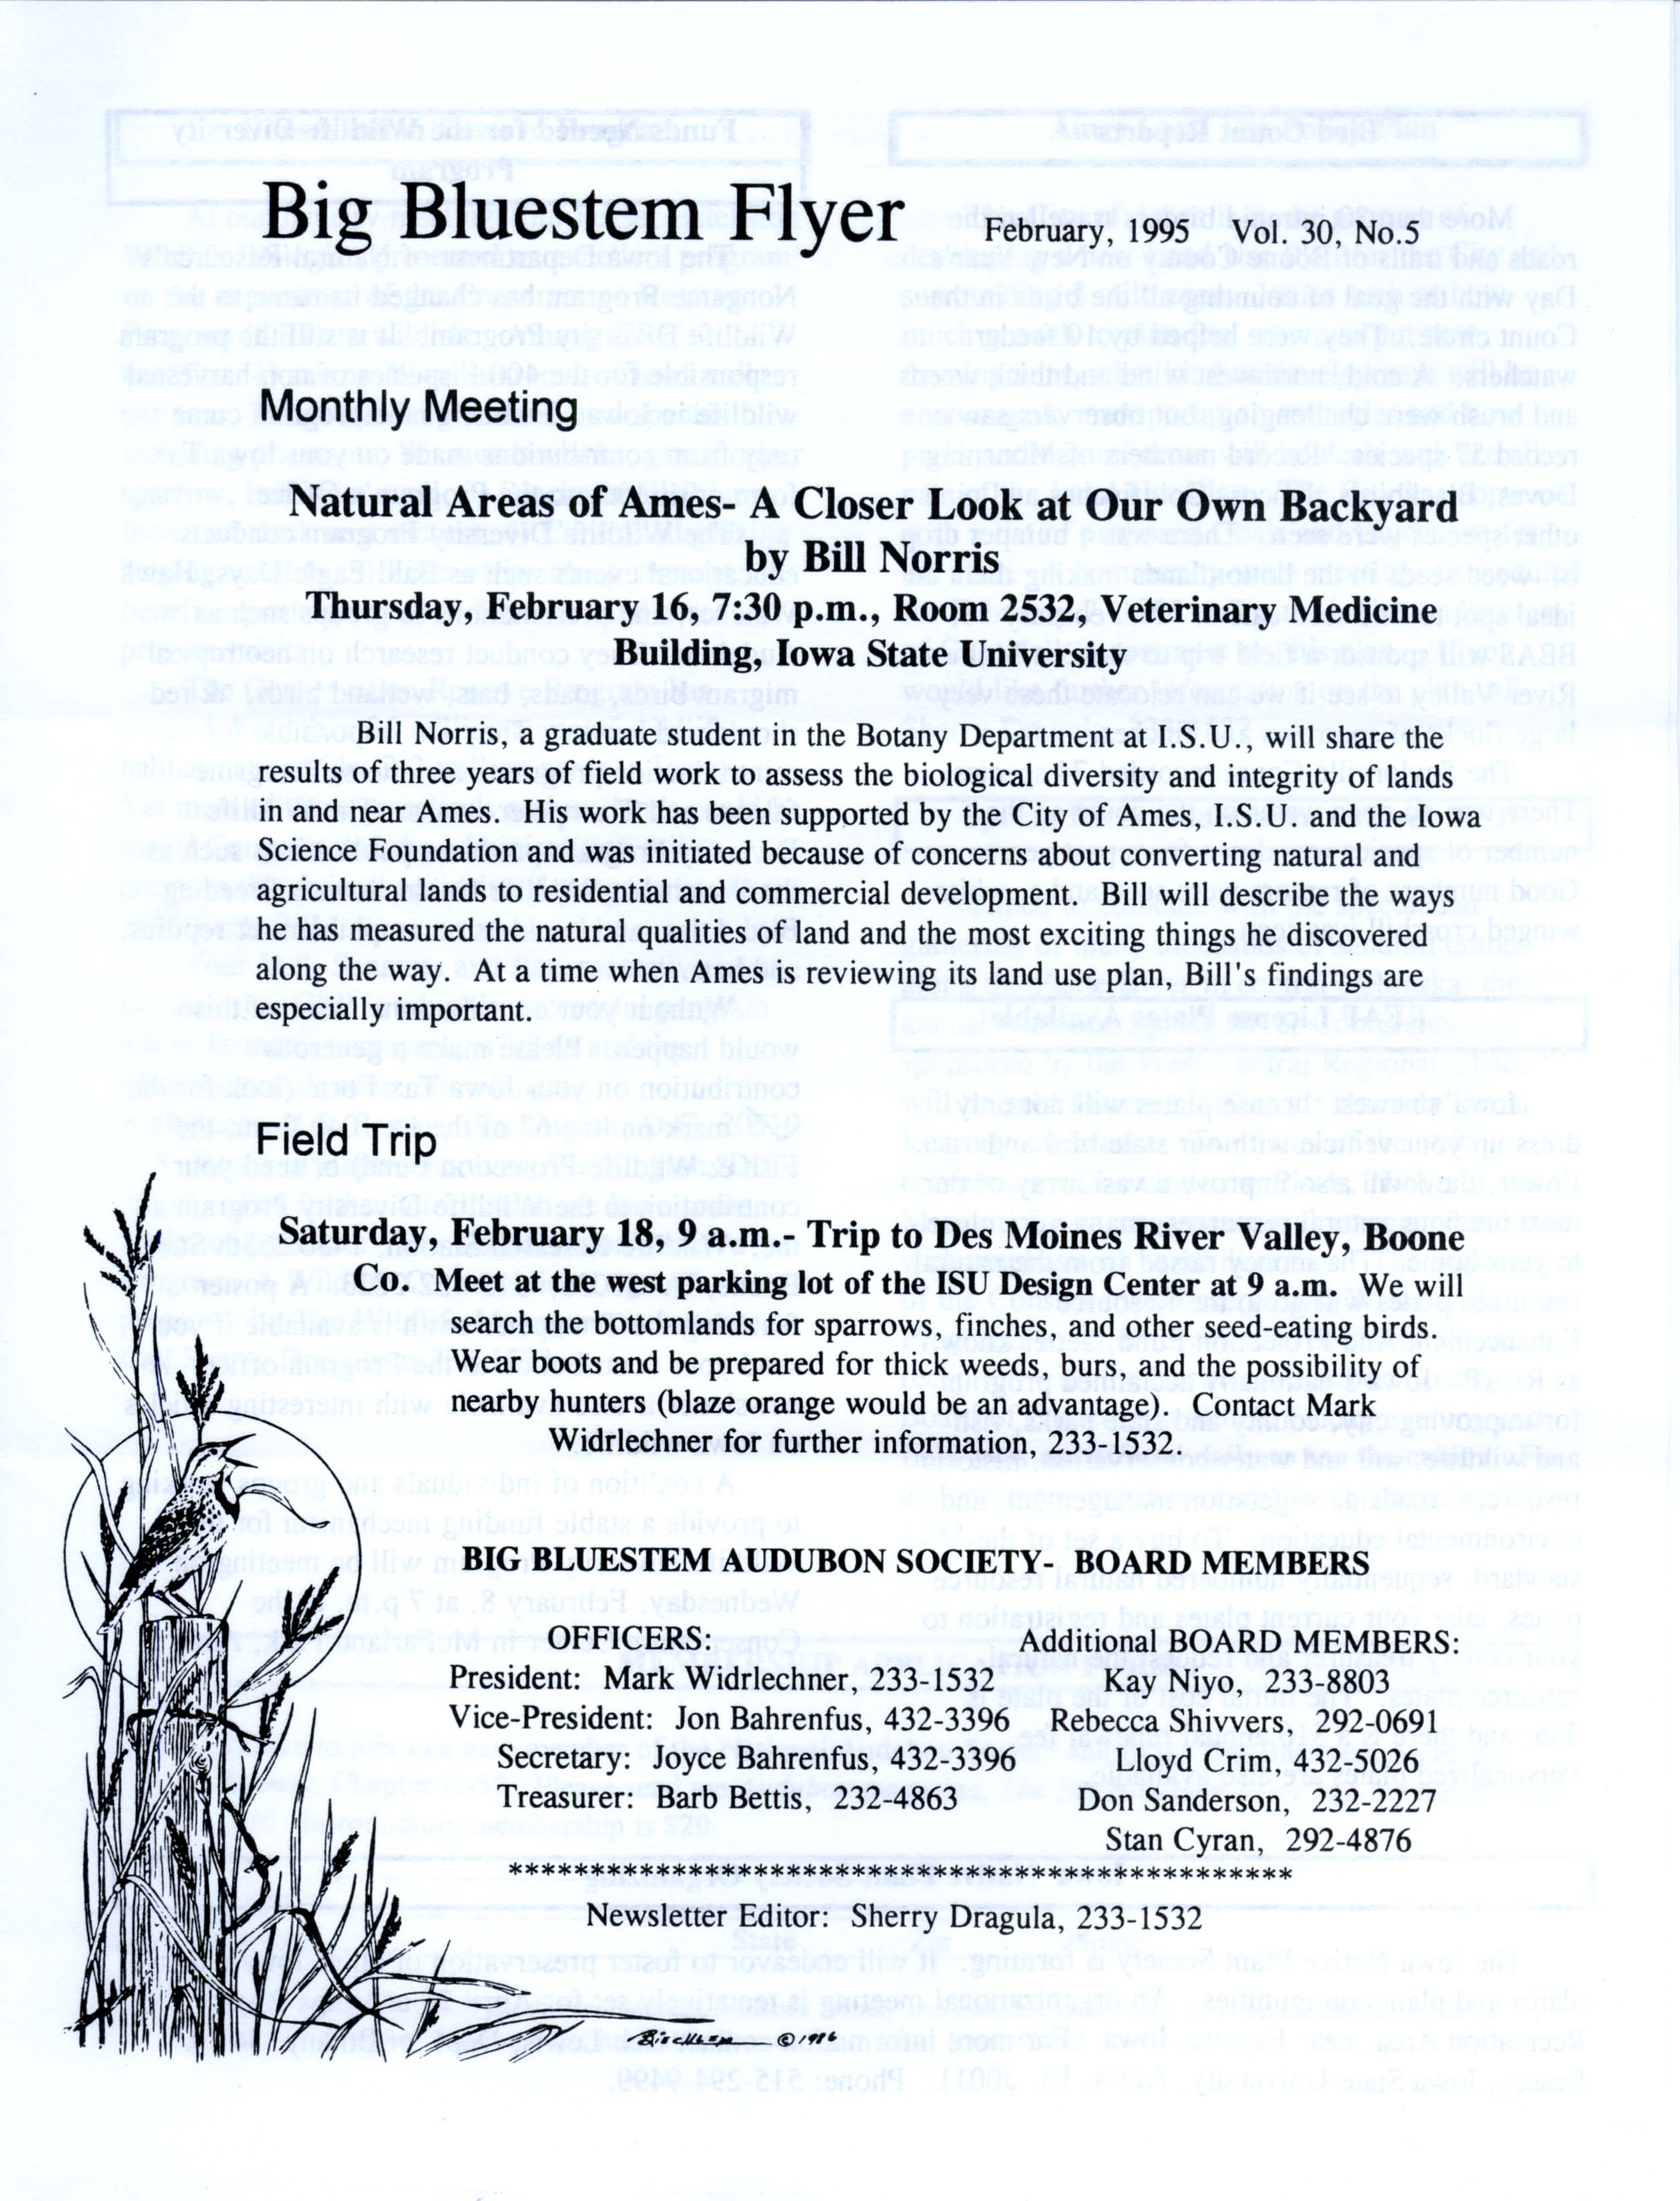 Big Bluestem Flyer, Volume 30, Number 5, February 1995